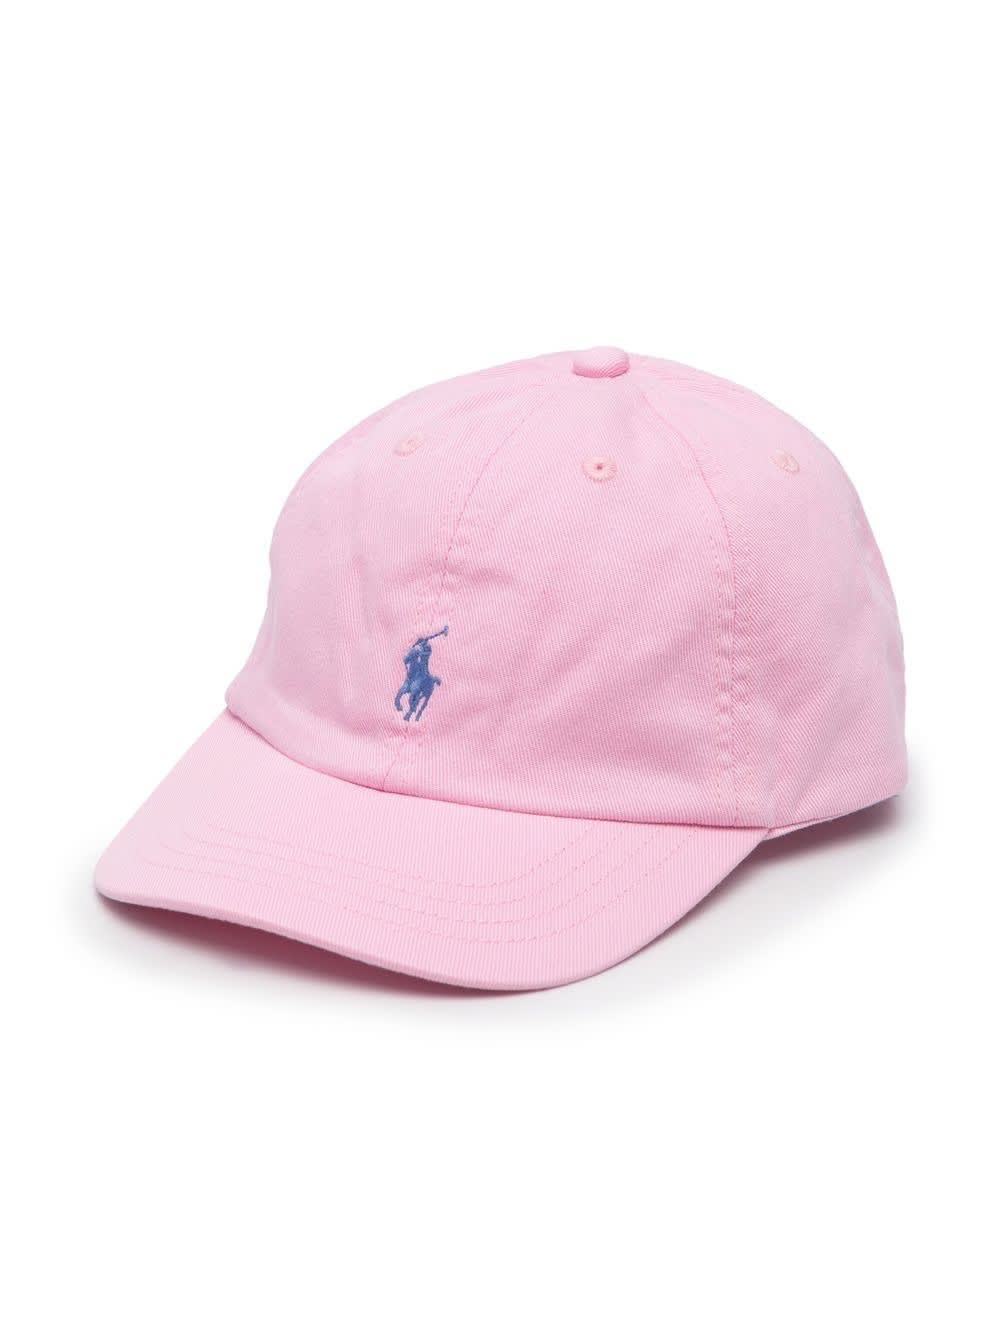 Ralph Lauren Pink Baseball Hat With Blue Pony